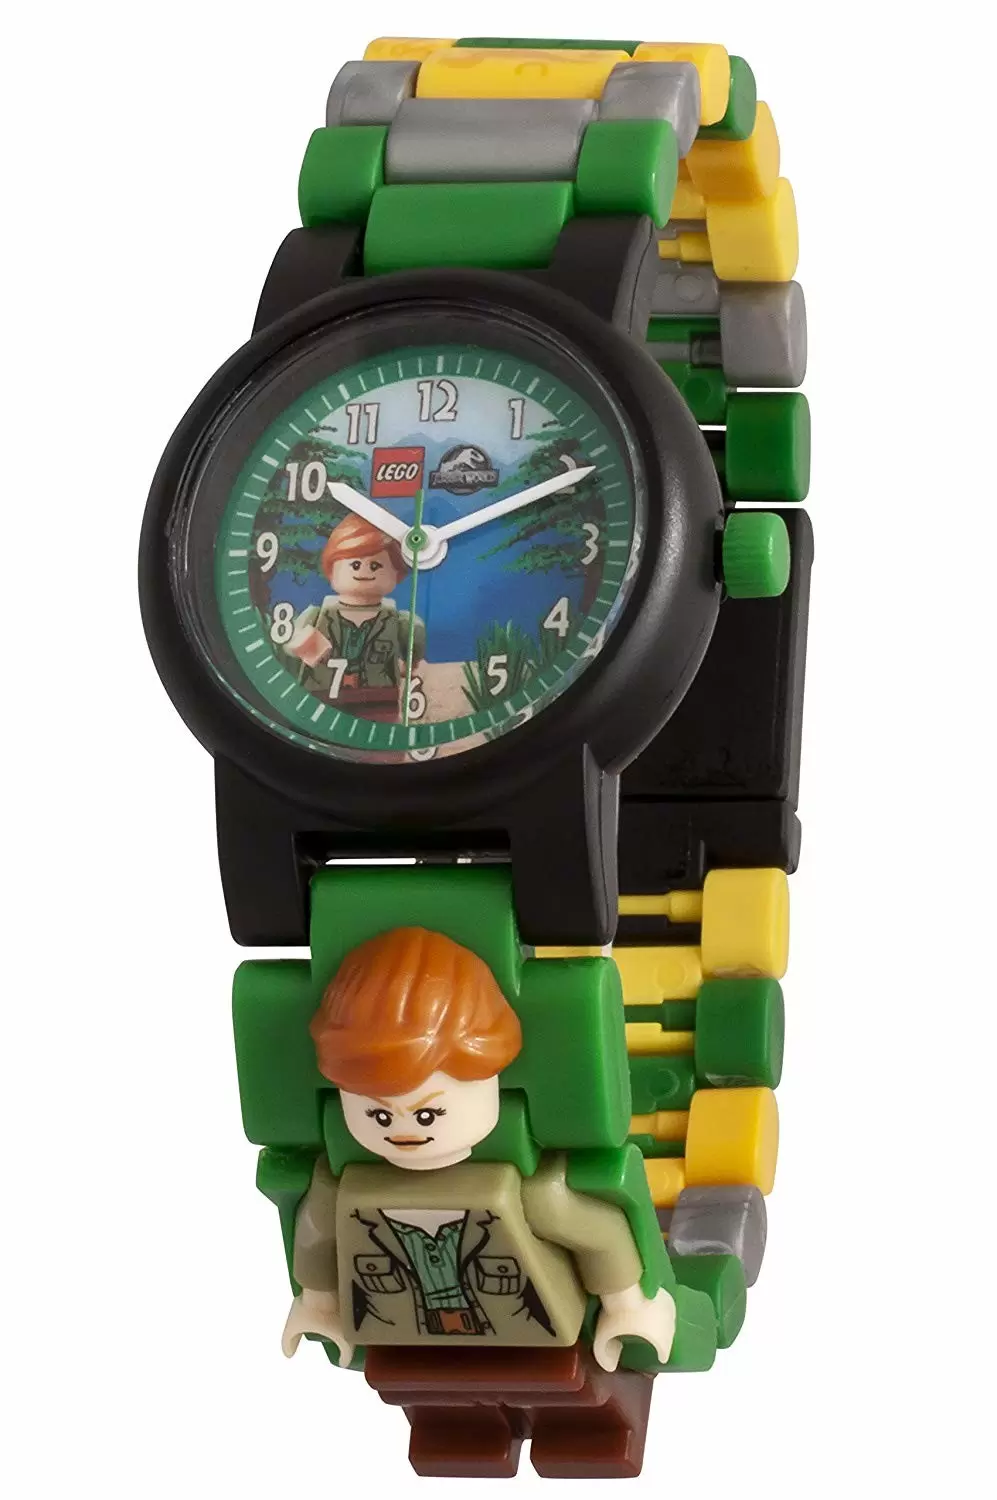 LEGO Watches - LEGO Jurassic World Watch - Claire